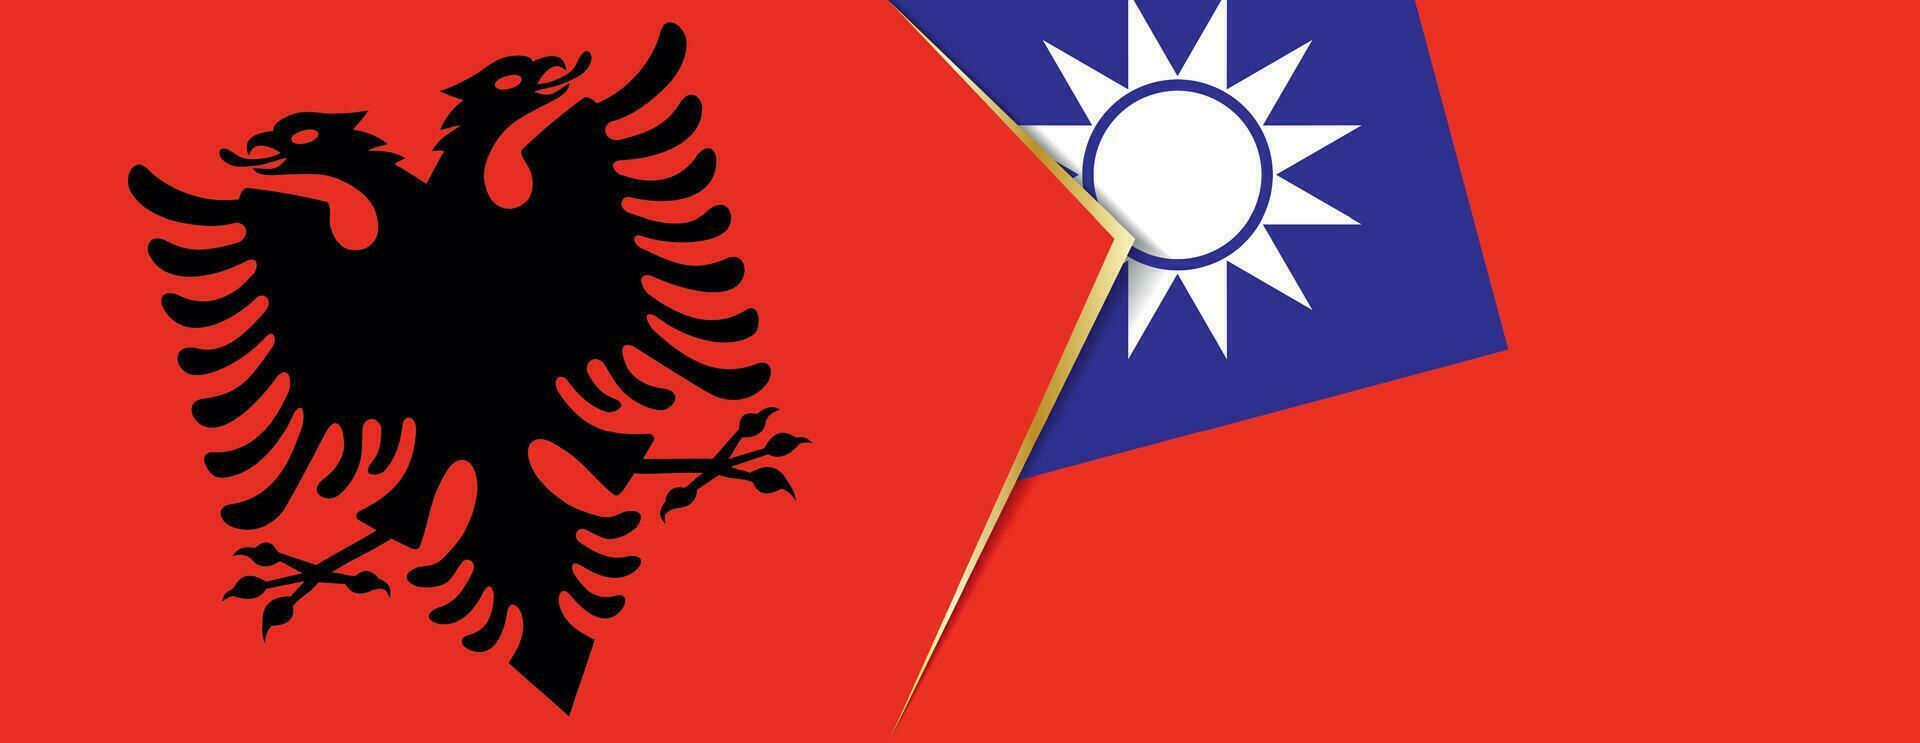 Albanien und Taiwan Flaggen, zwei Vektor Flaggen.